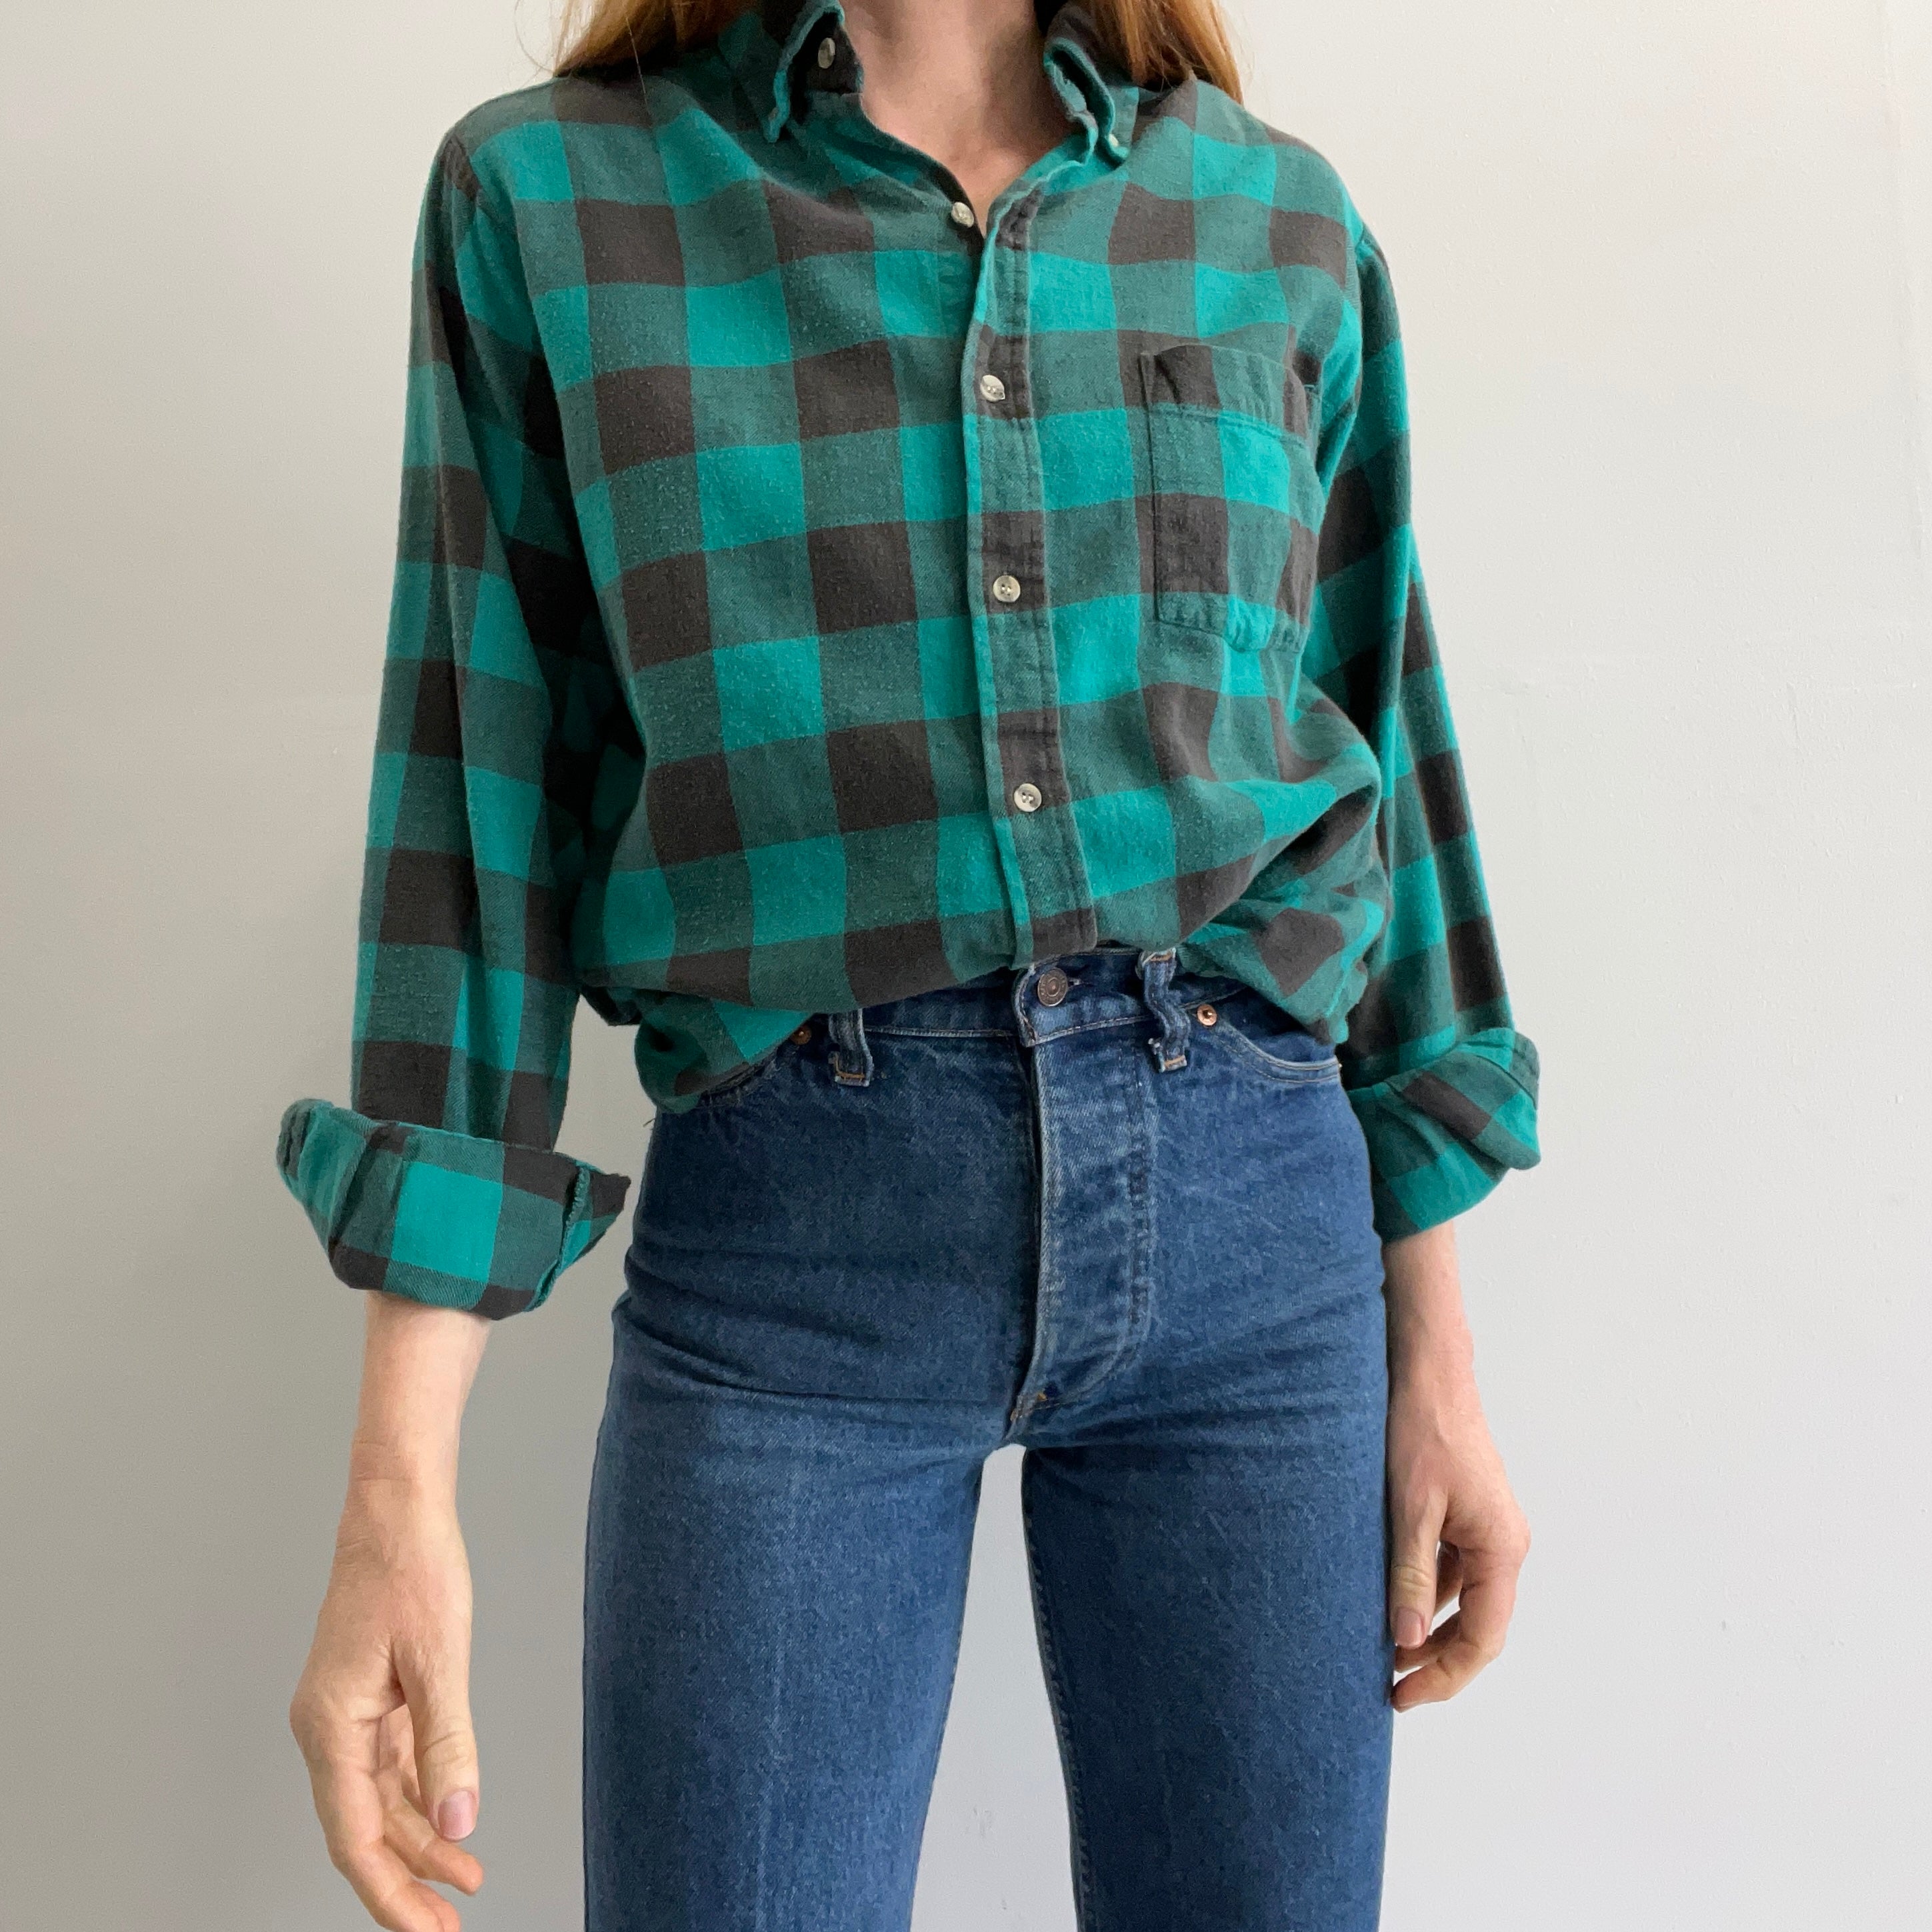 1980/90s Super Soft Green/Teal Buffalo Plaid Super Soft Cotton Flannel